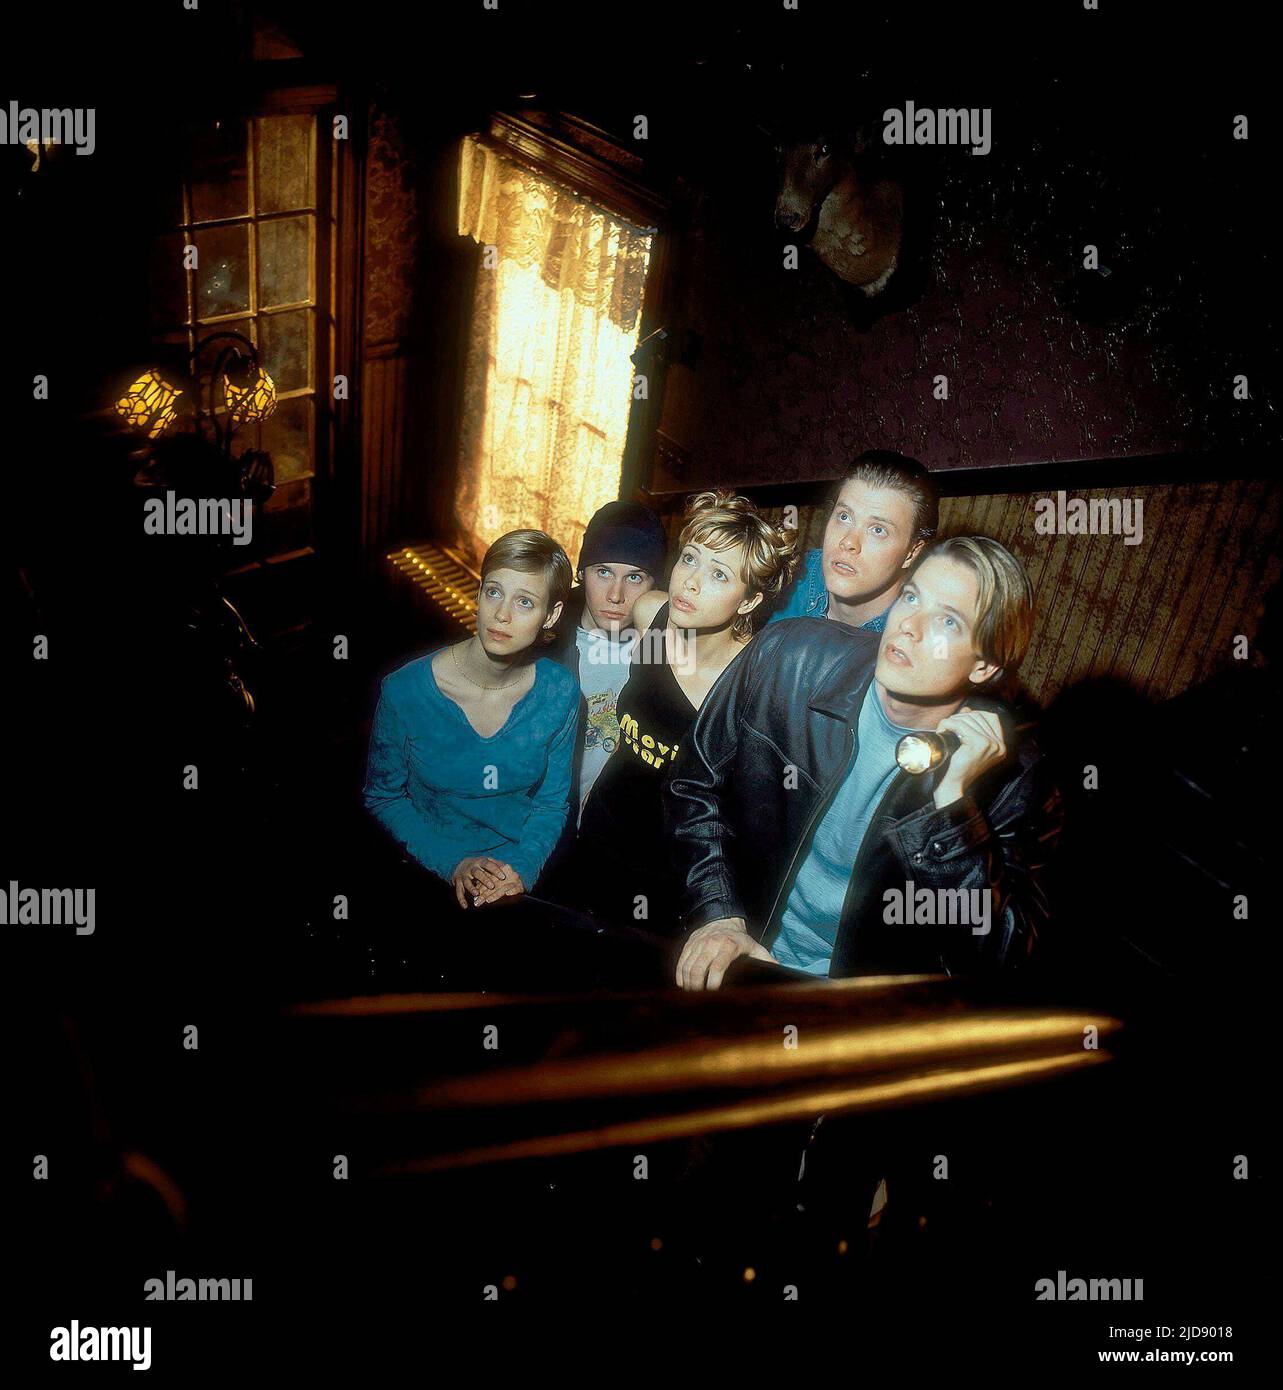 REGAN,LEMCHE,SKY,O'REILLY,JOHNSON, MY LITTLE EYE, 2002, Stock Photo